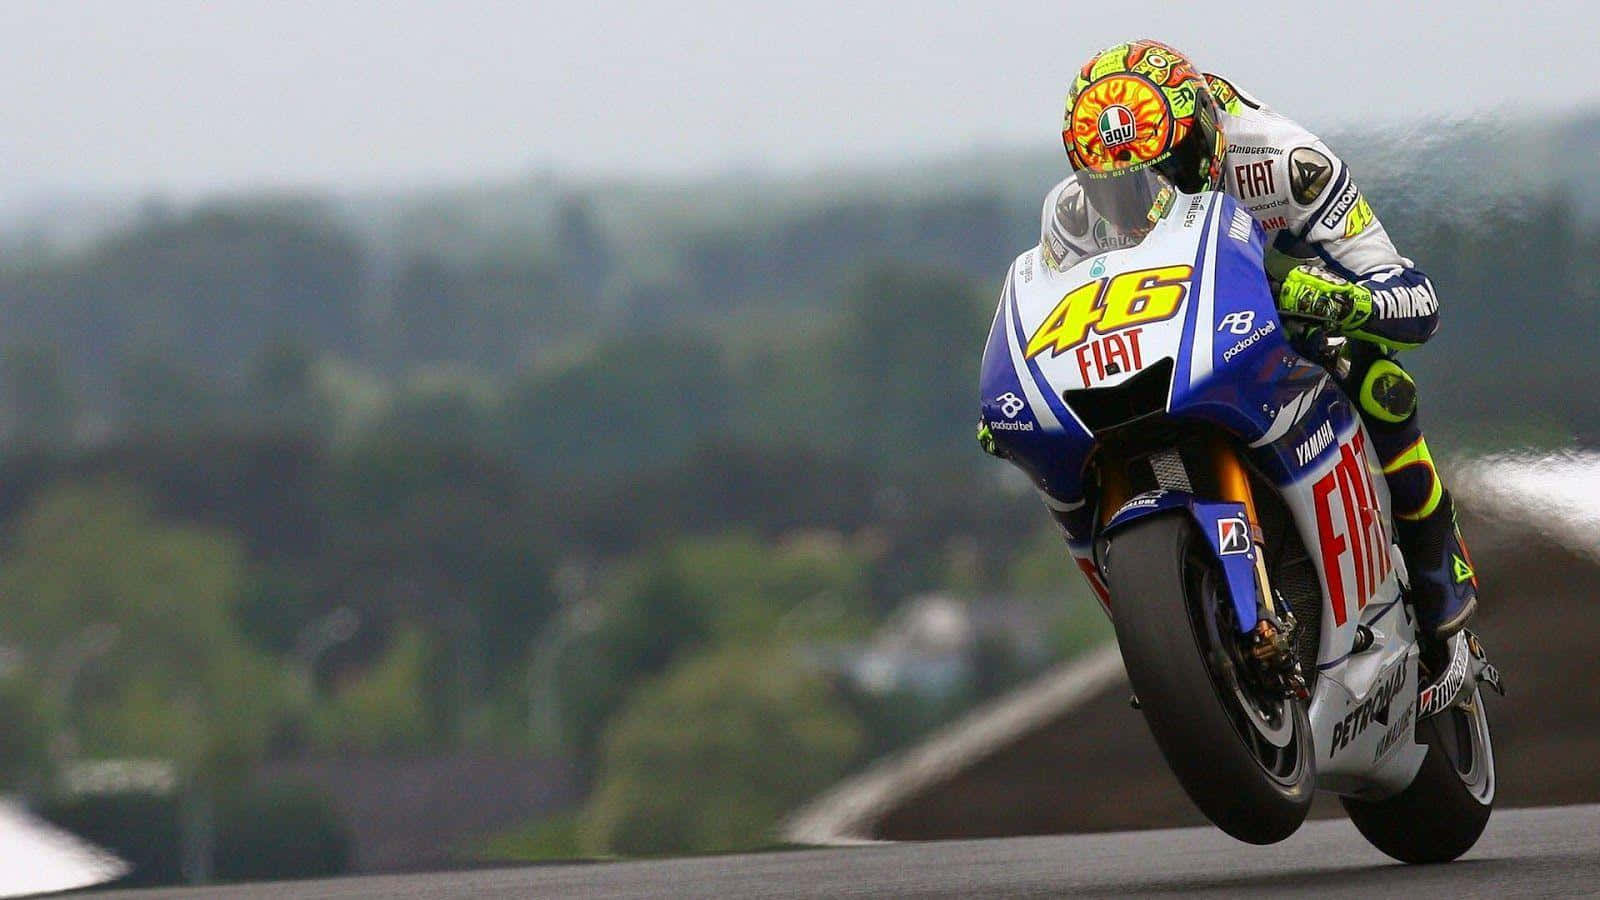 The Master Of Racing - Vr46 Riding A Yamaha 500cc Motorcycle Wallpaper